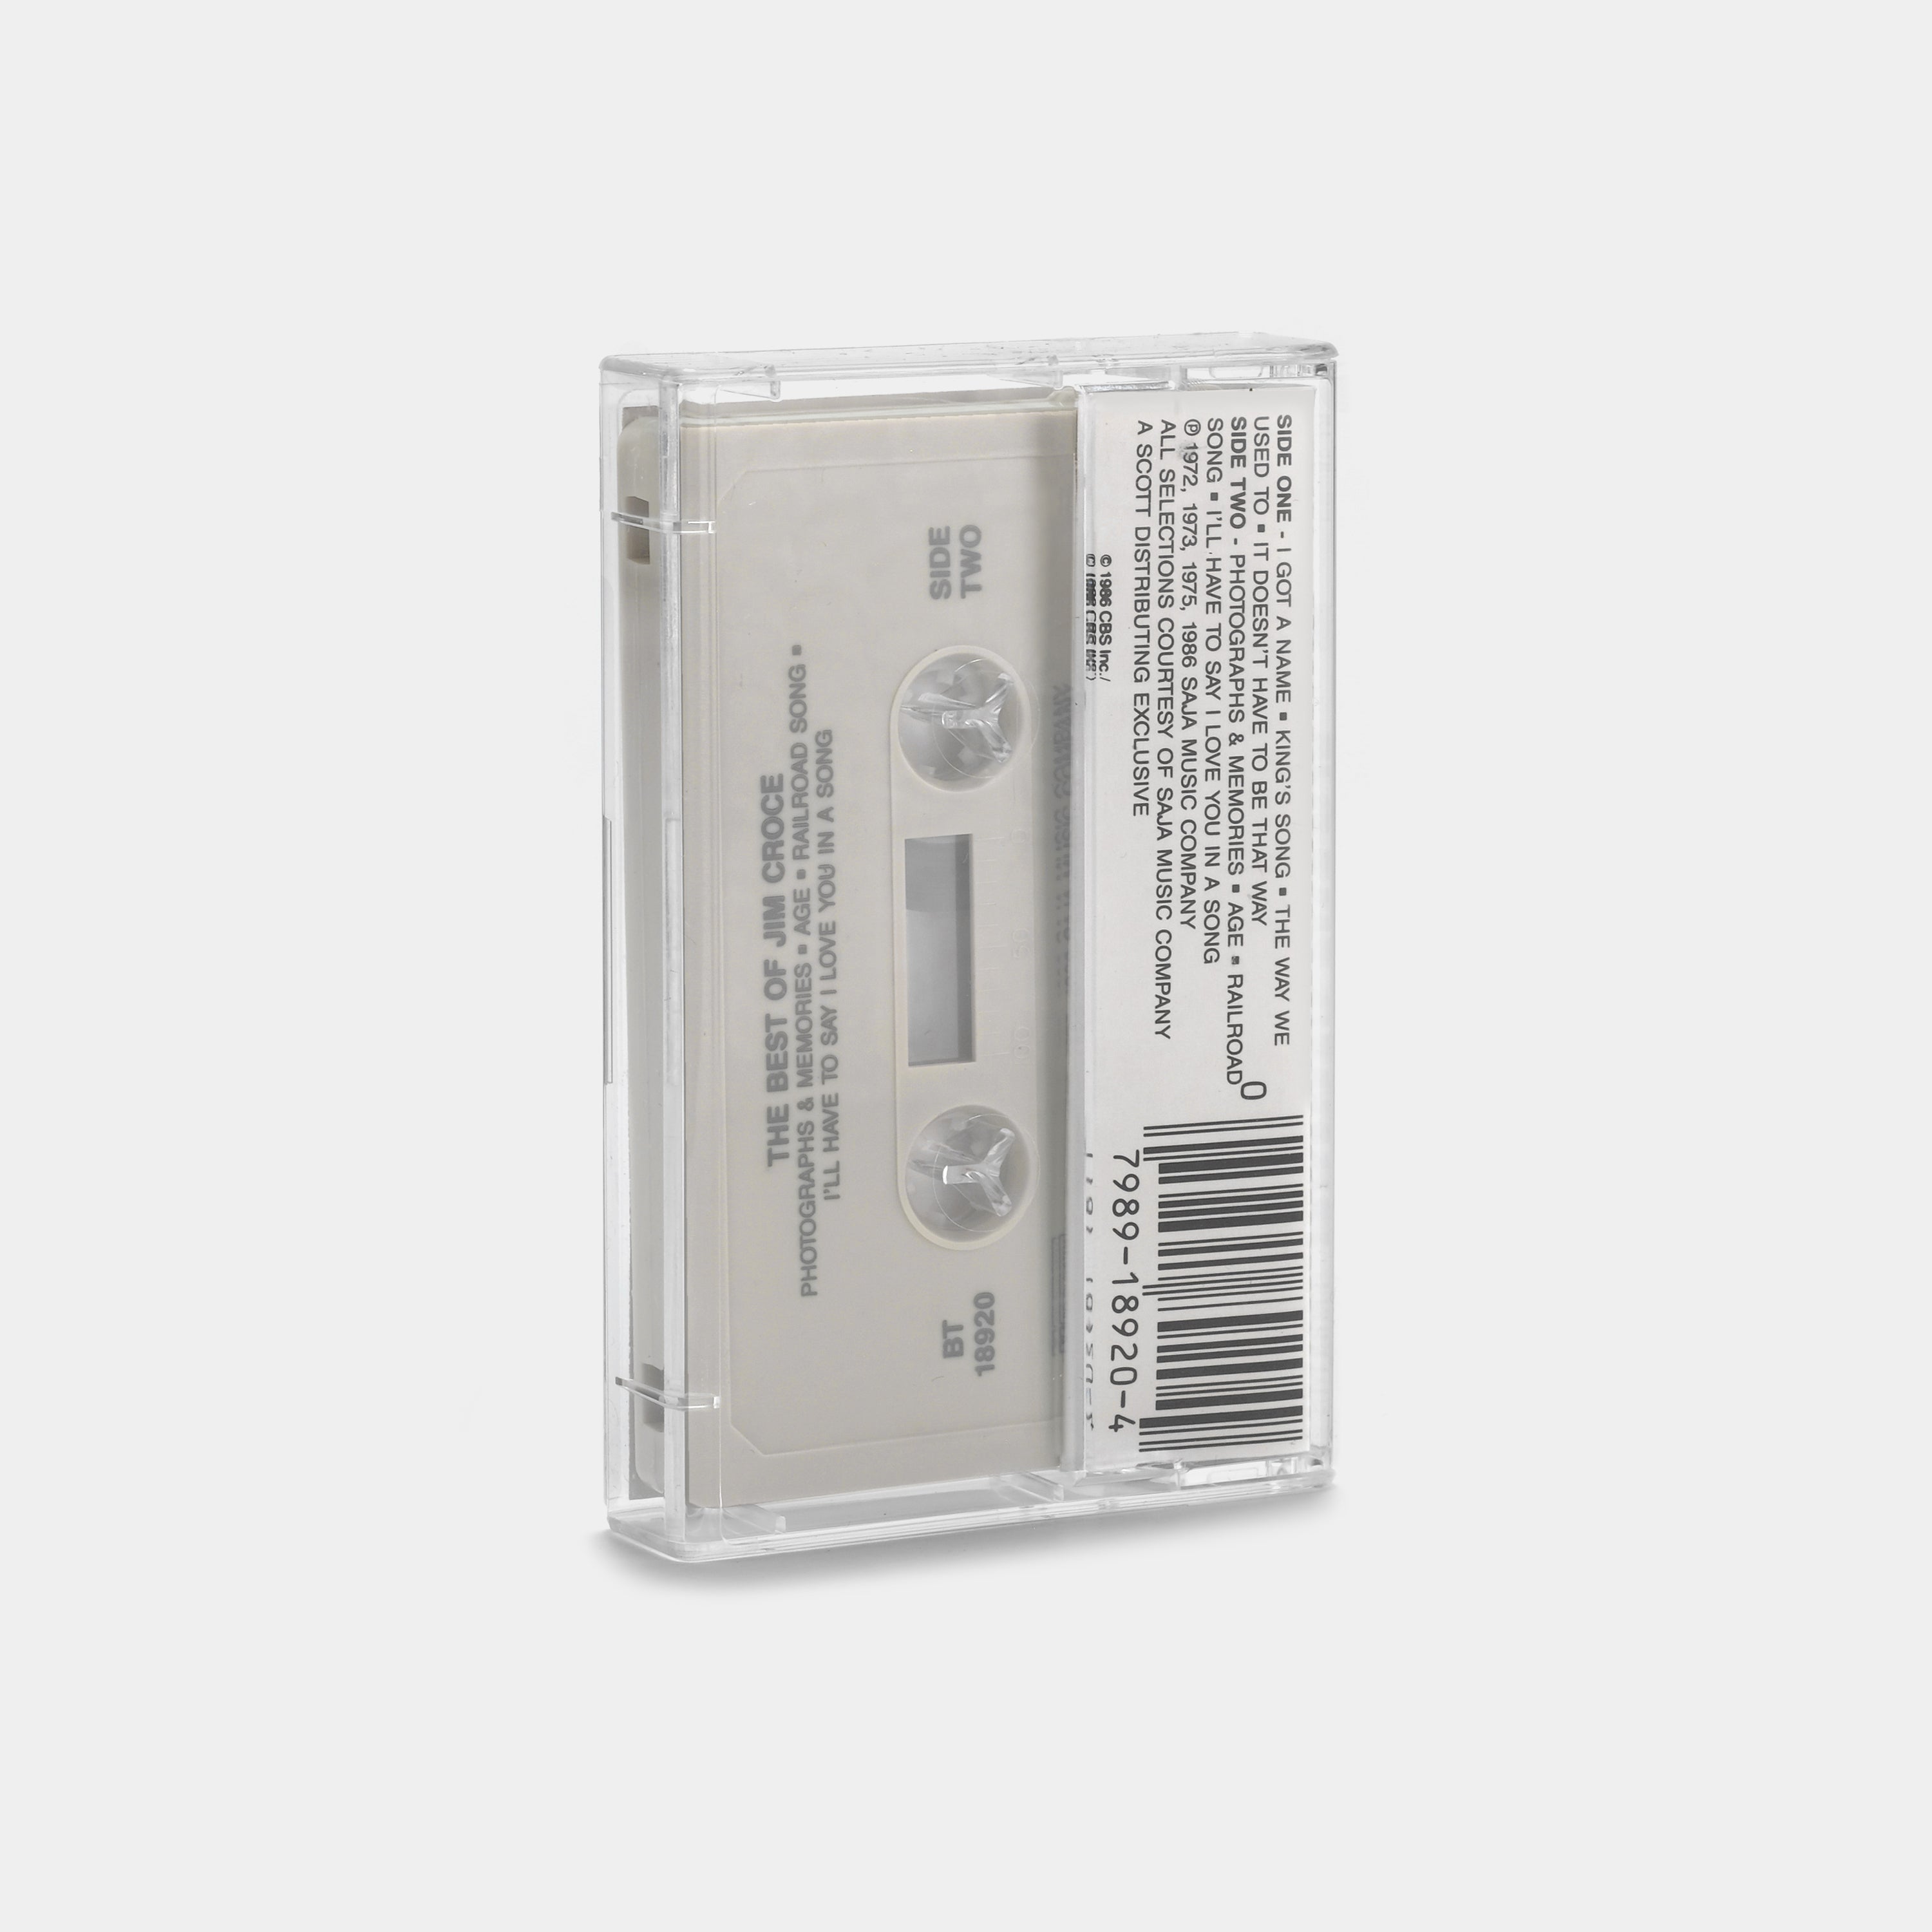 Jim Croce - The Best of Jim Croce - Vol. 2 Cassette Tape